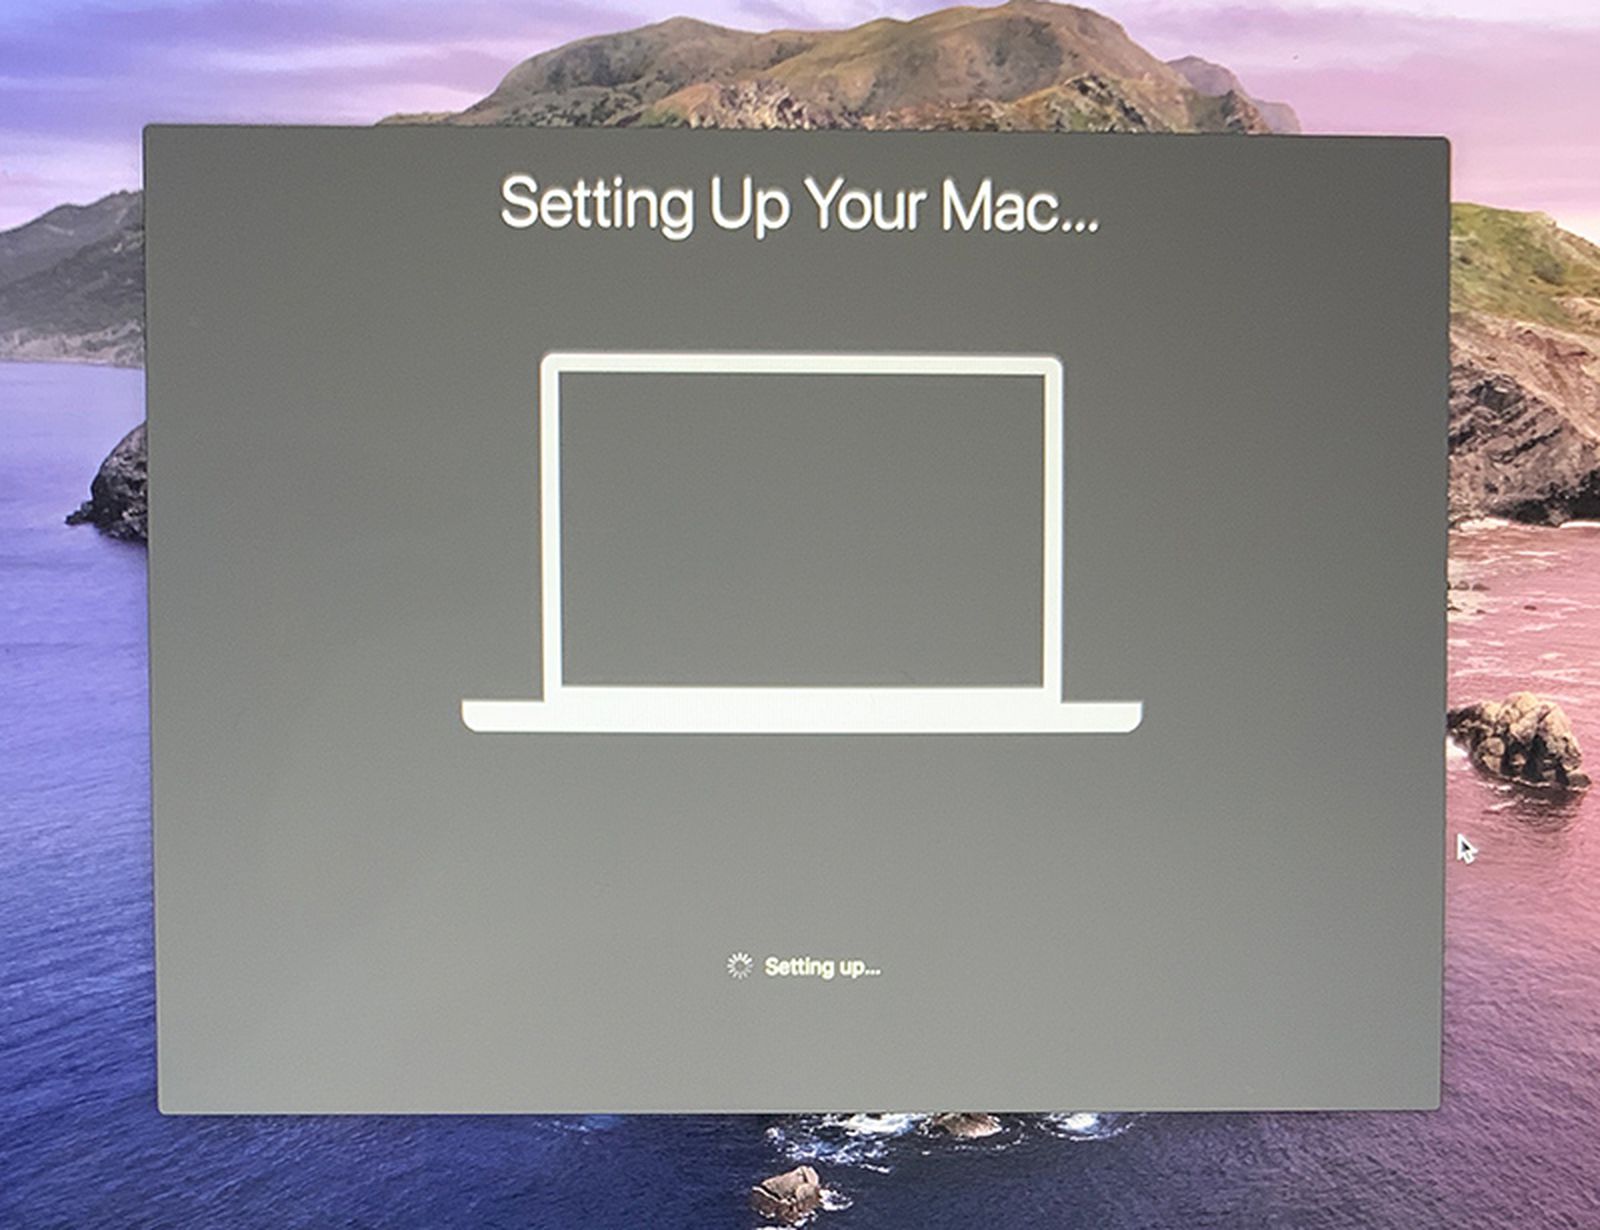 mac hangs on boot after update